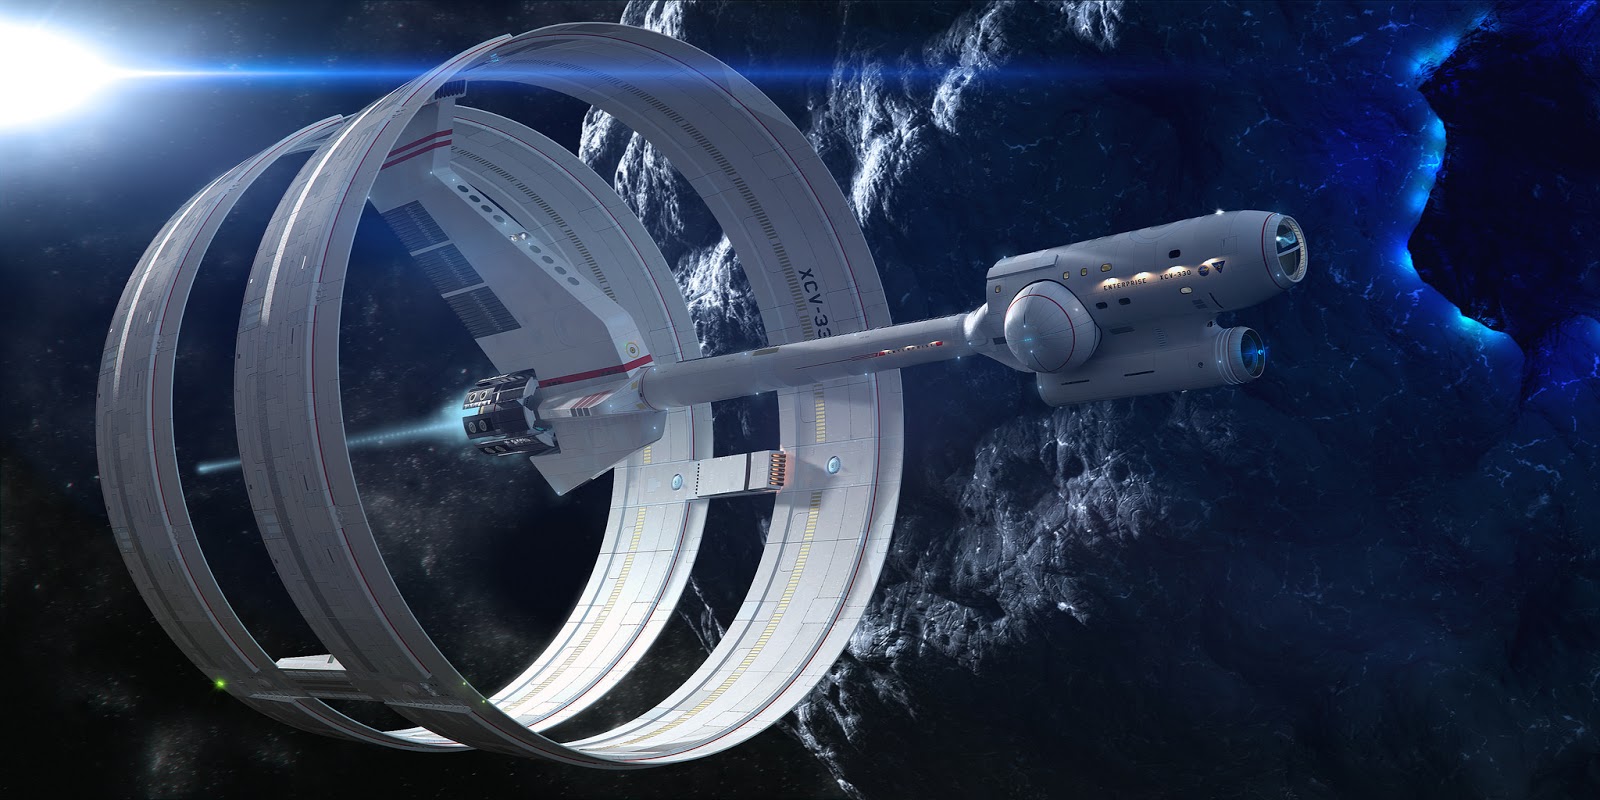 Enterprise VINYL DECAL STICKER Cool Cut-Out XINDI INSECTOID Ship! Star Trek